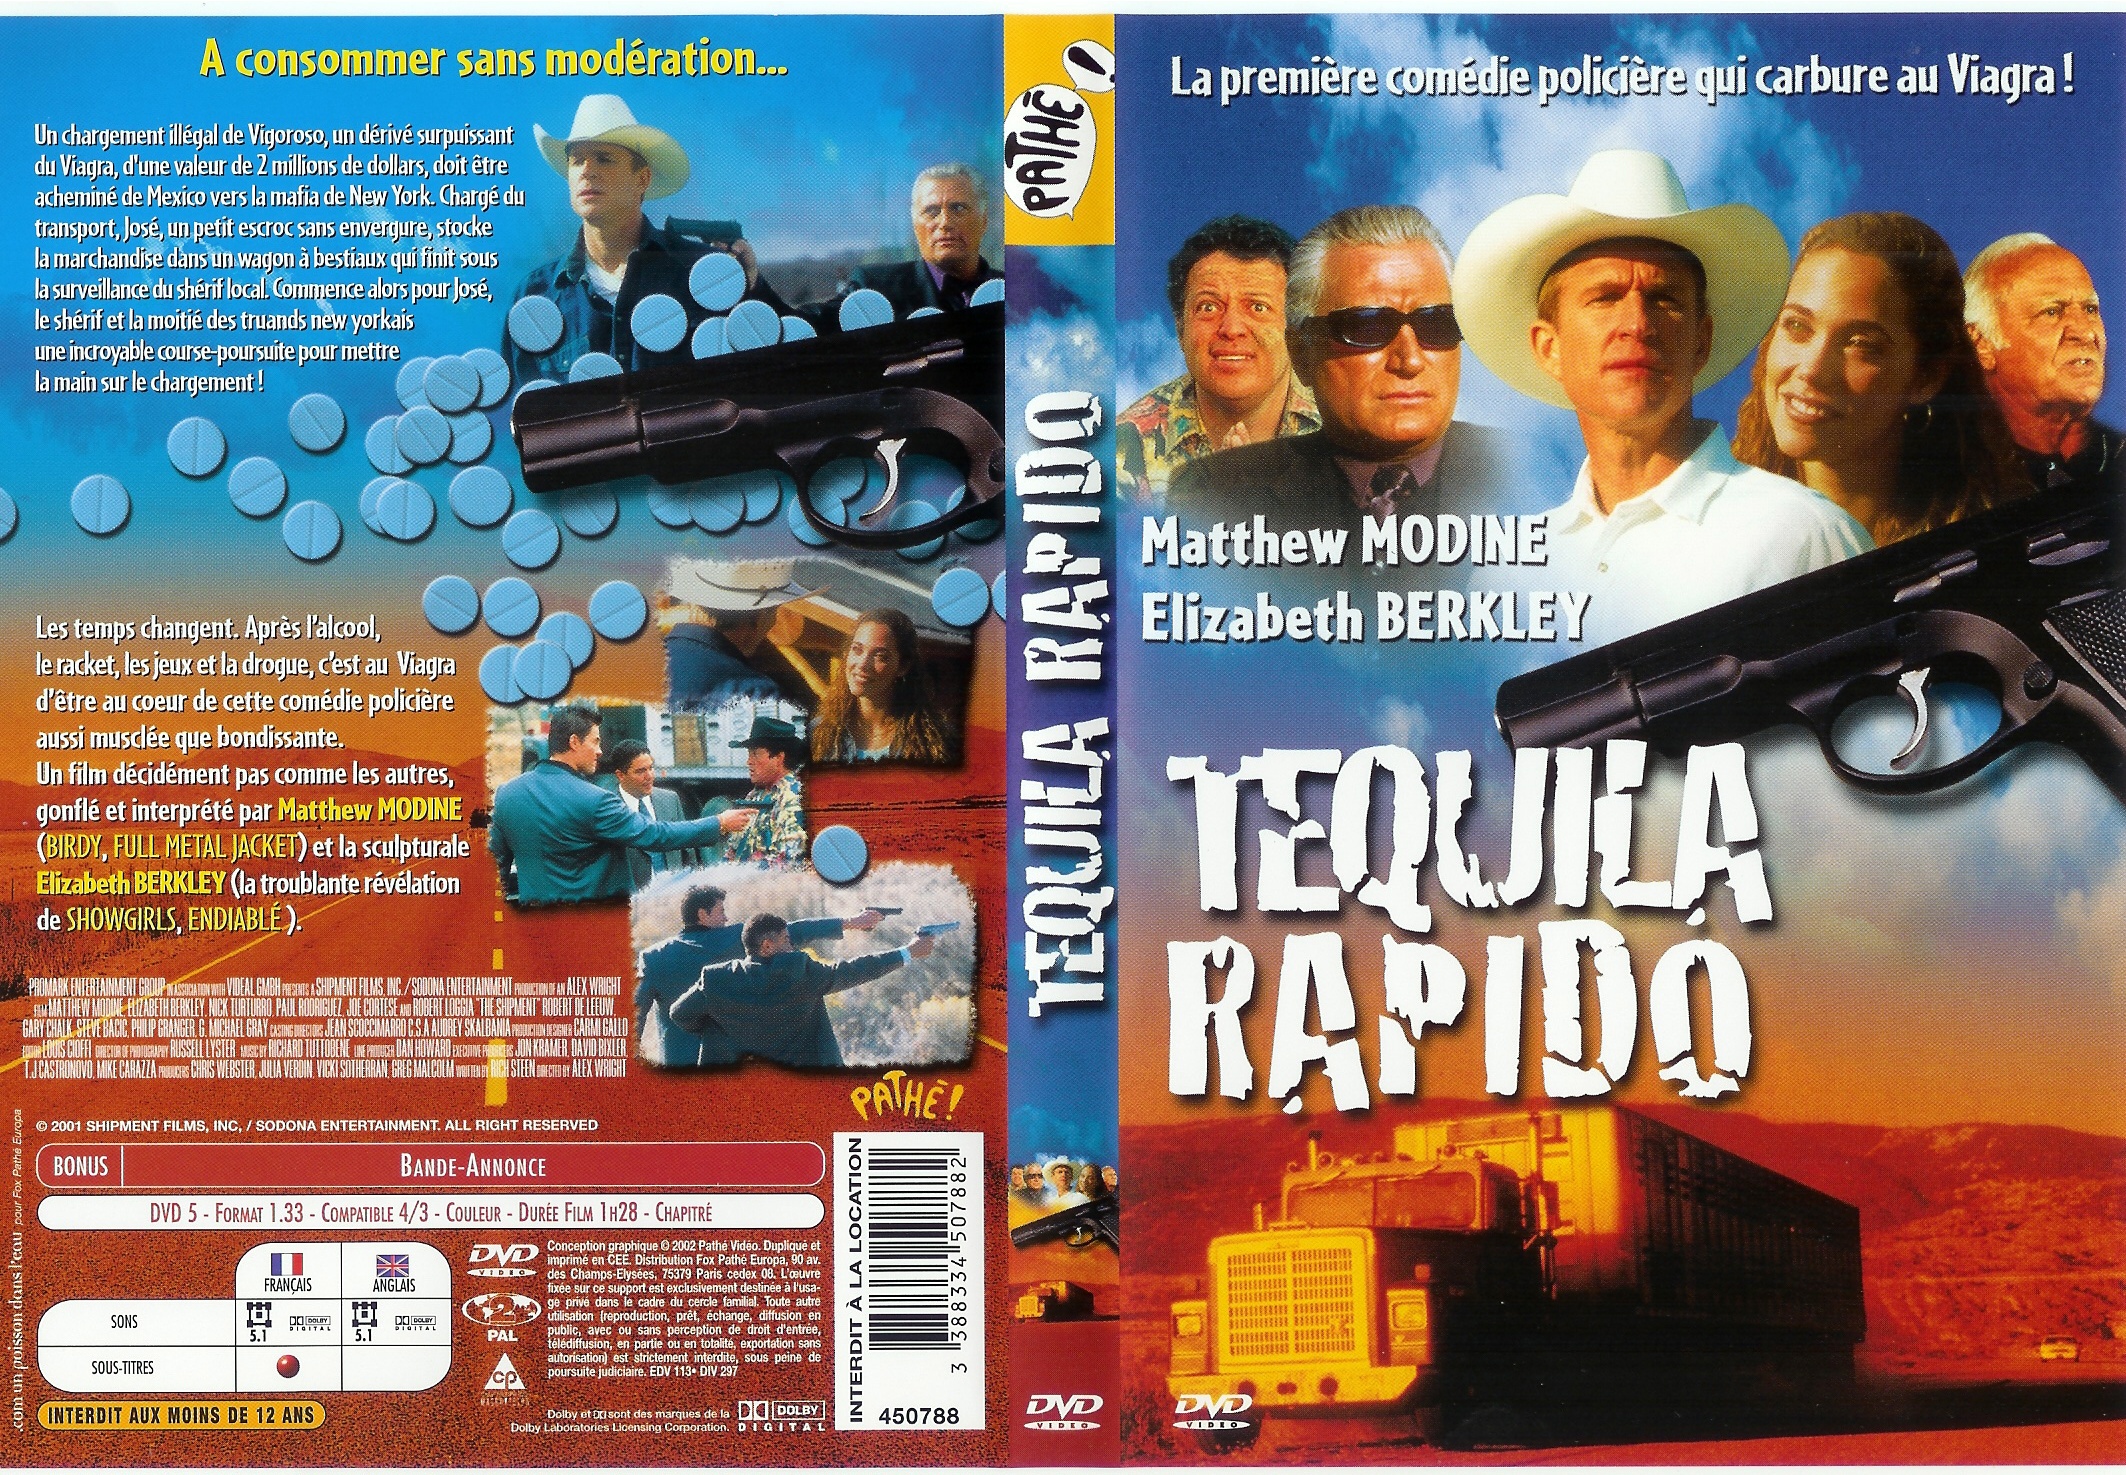 Jaquette DVD Tequila rapido